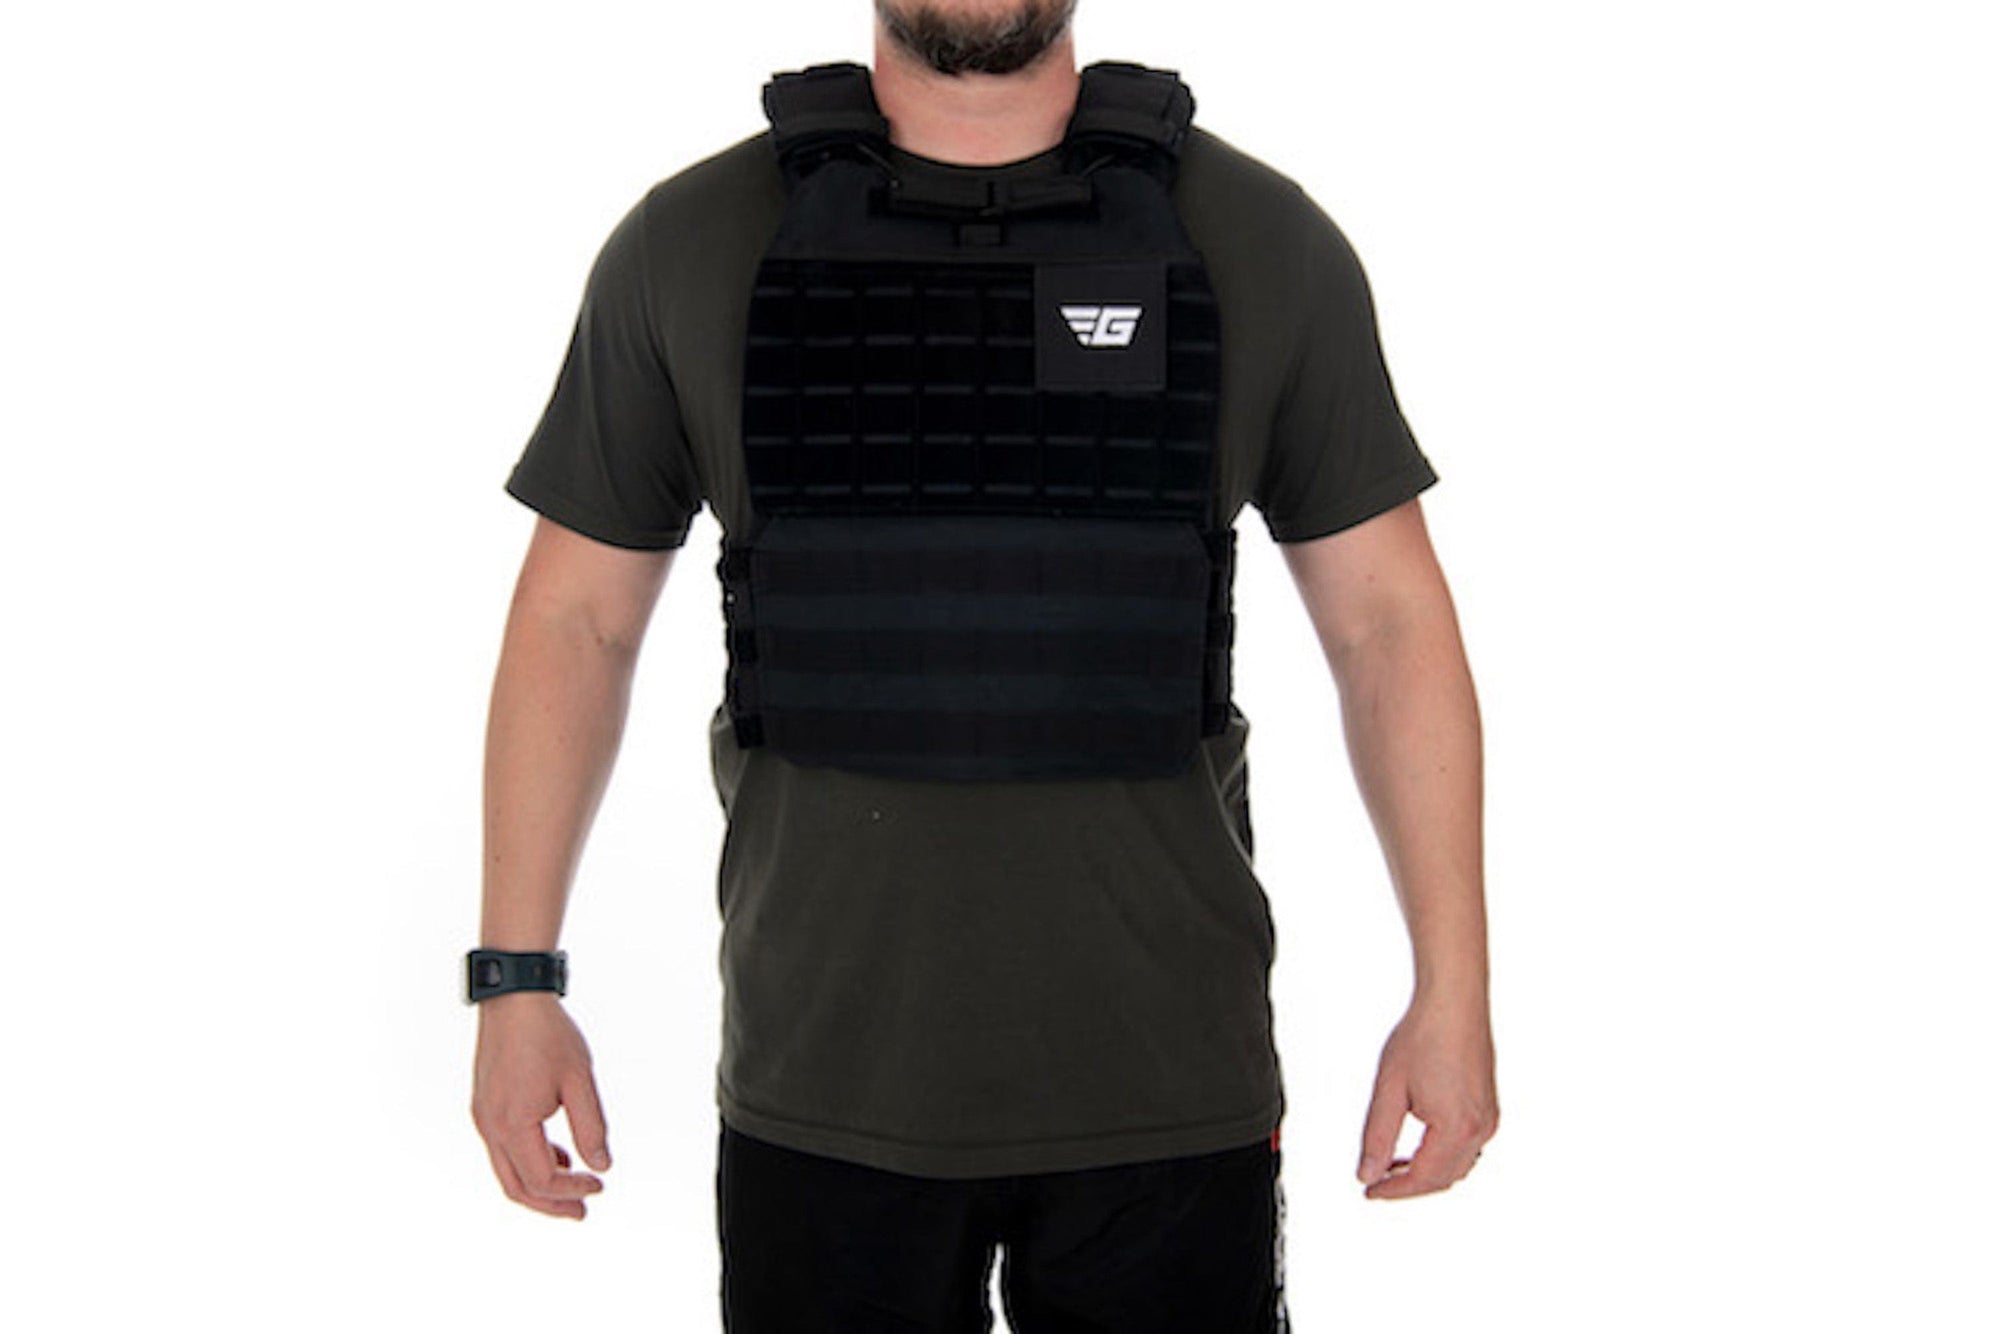 Black weighted vest